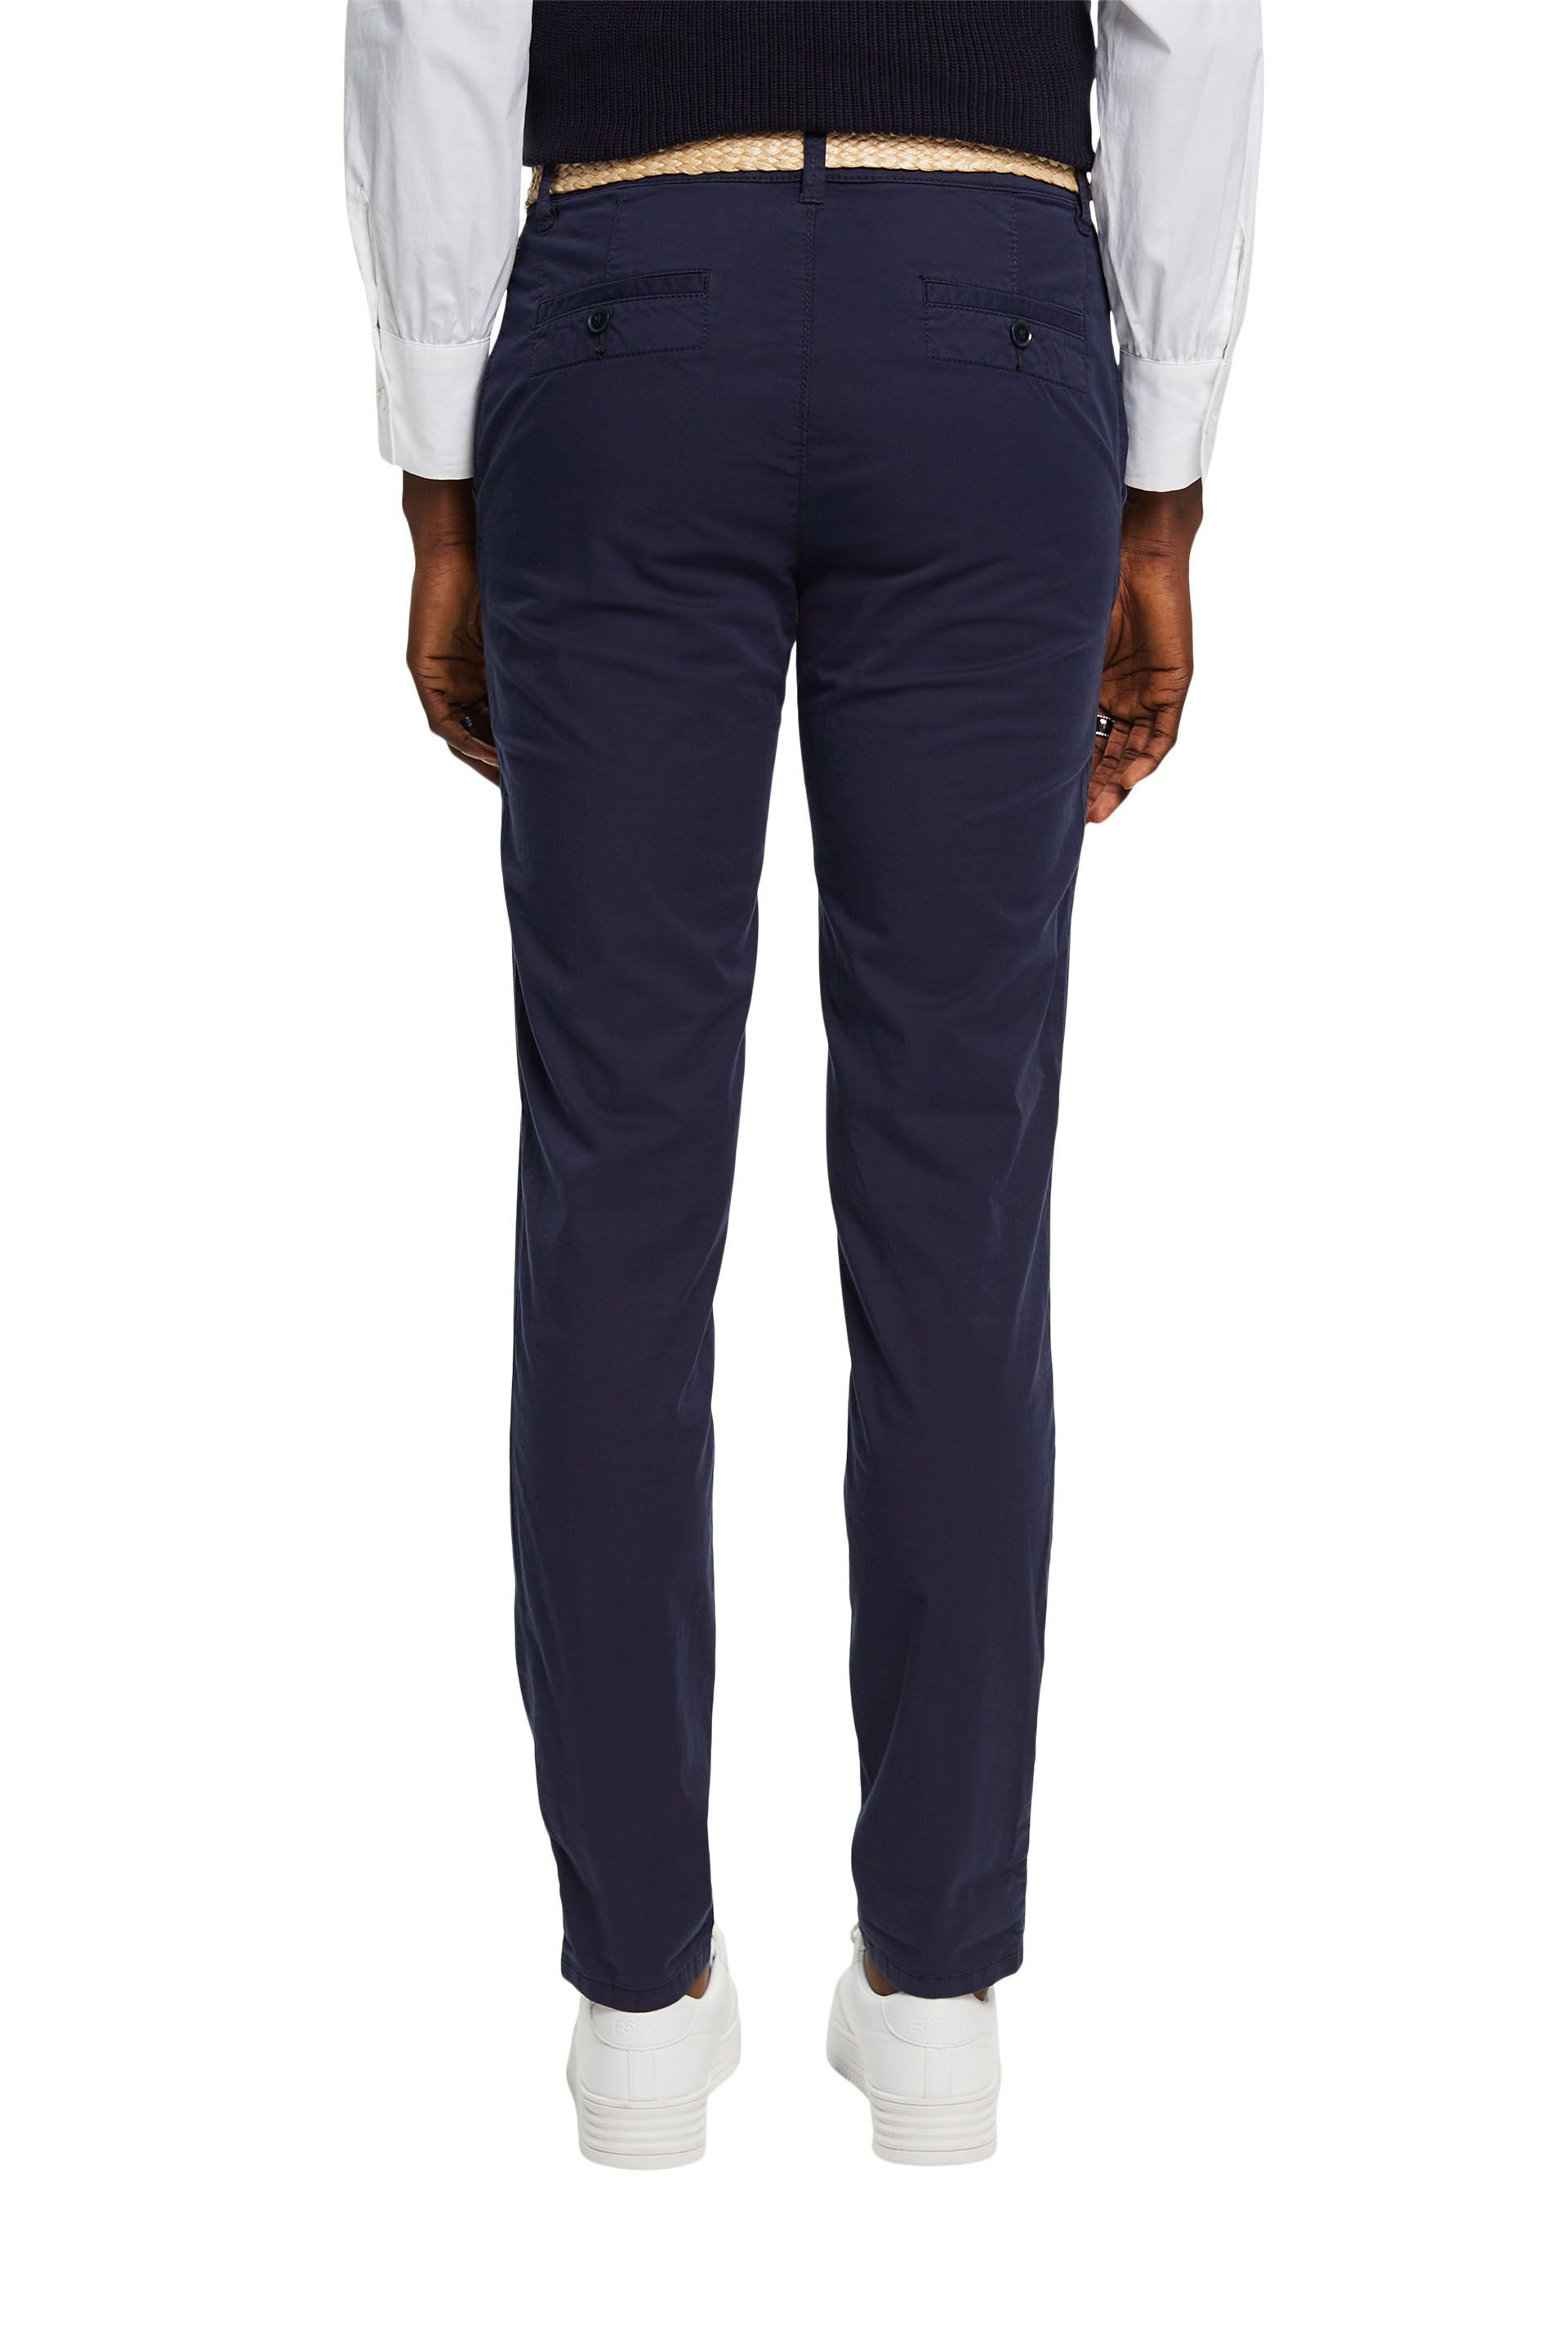 Esprit - Pantaloni chino cropped con cintura, Blu scuro, large image number 2